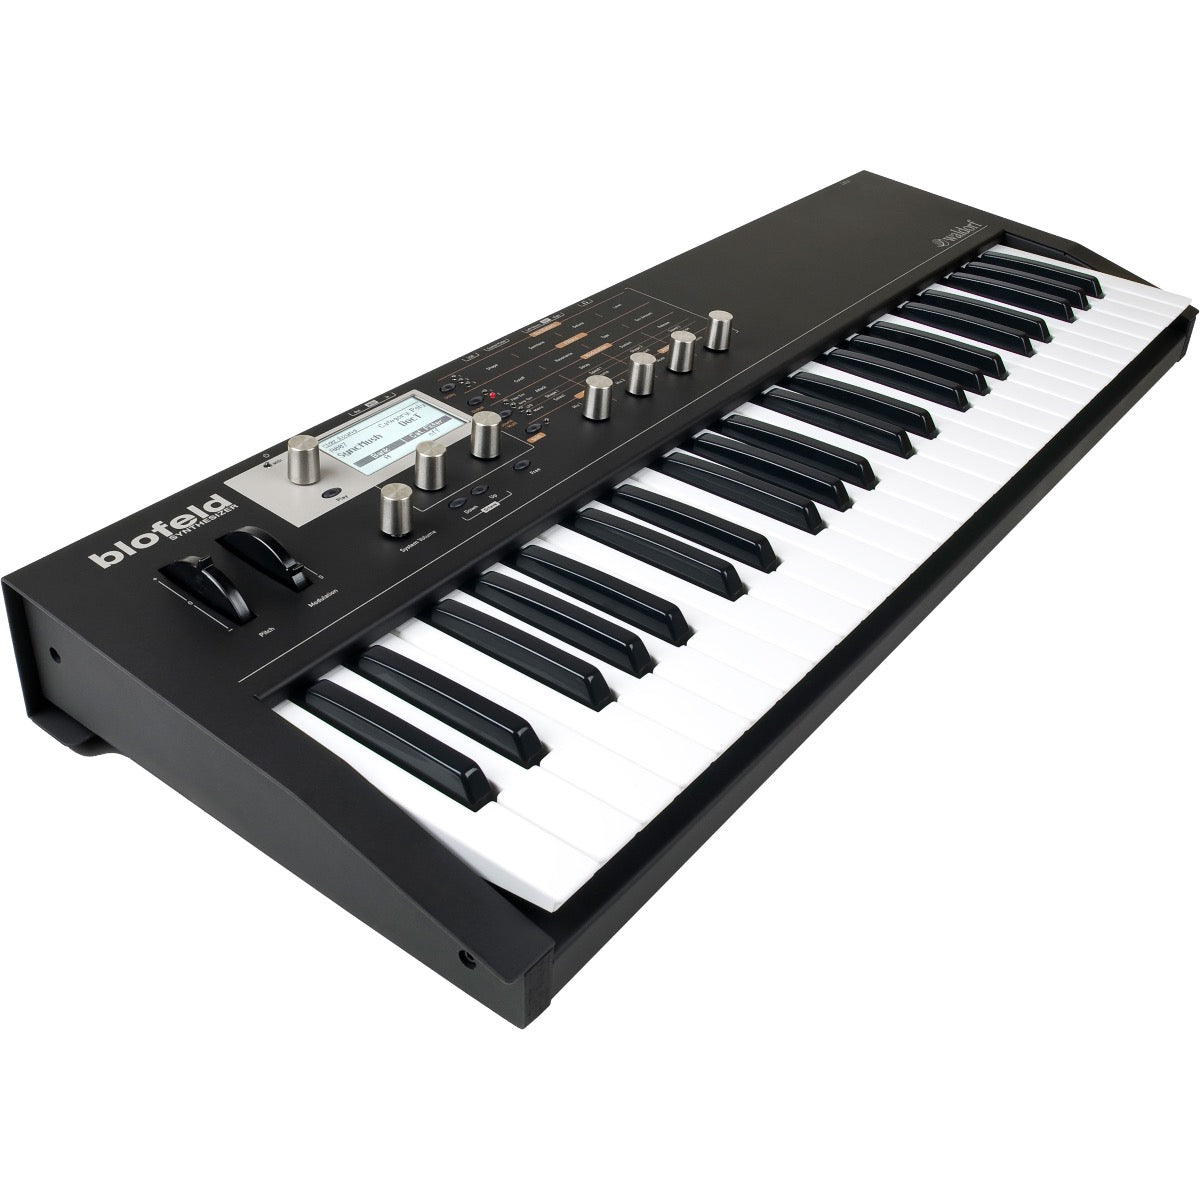 Waldorf Blofeld Keyboard Synthesizer - Black / Shadow Edition View 3